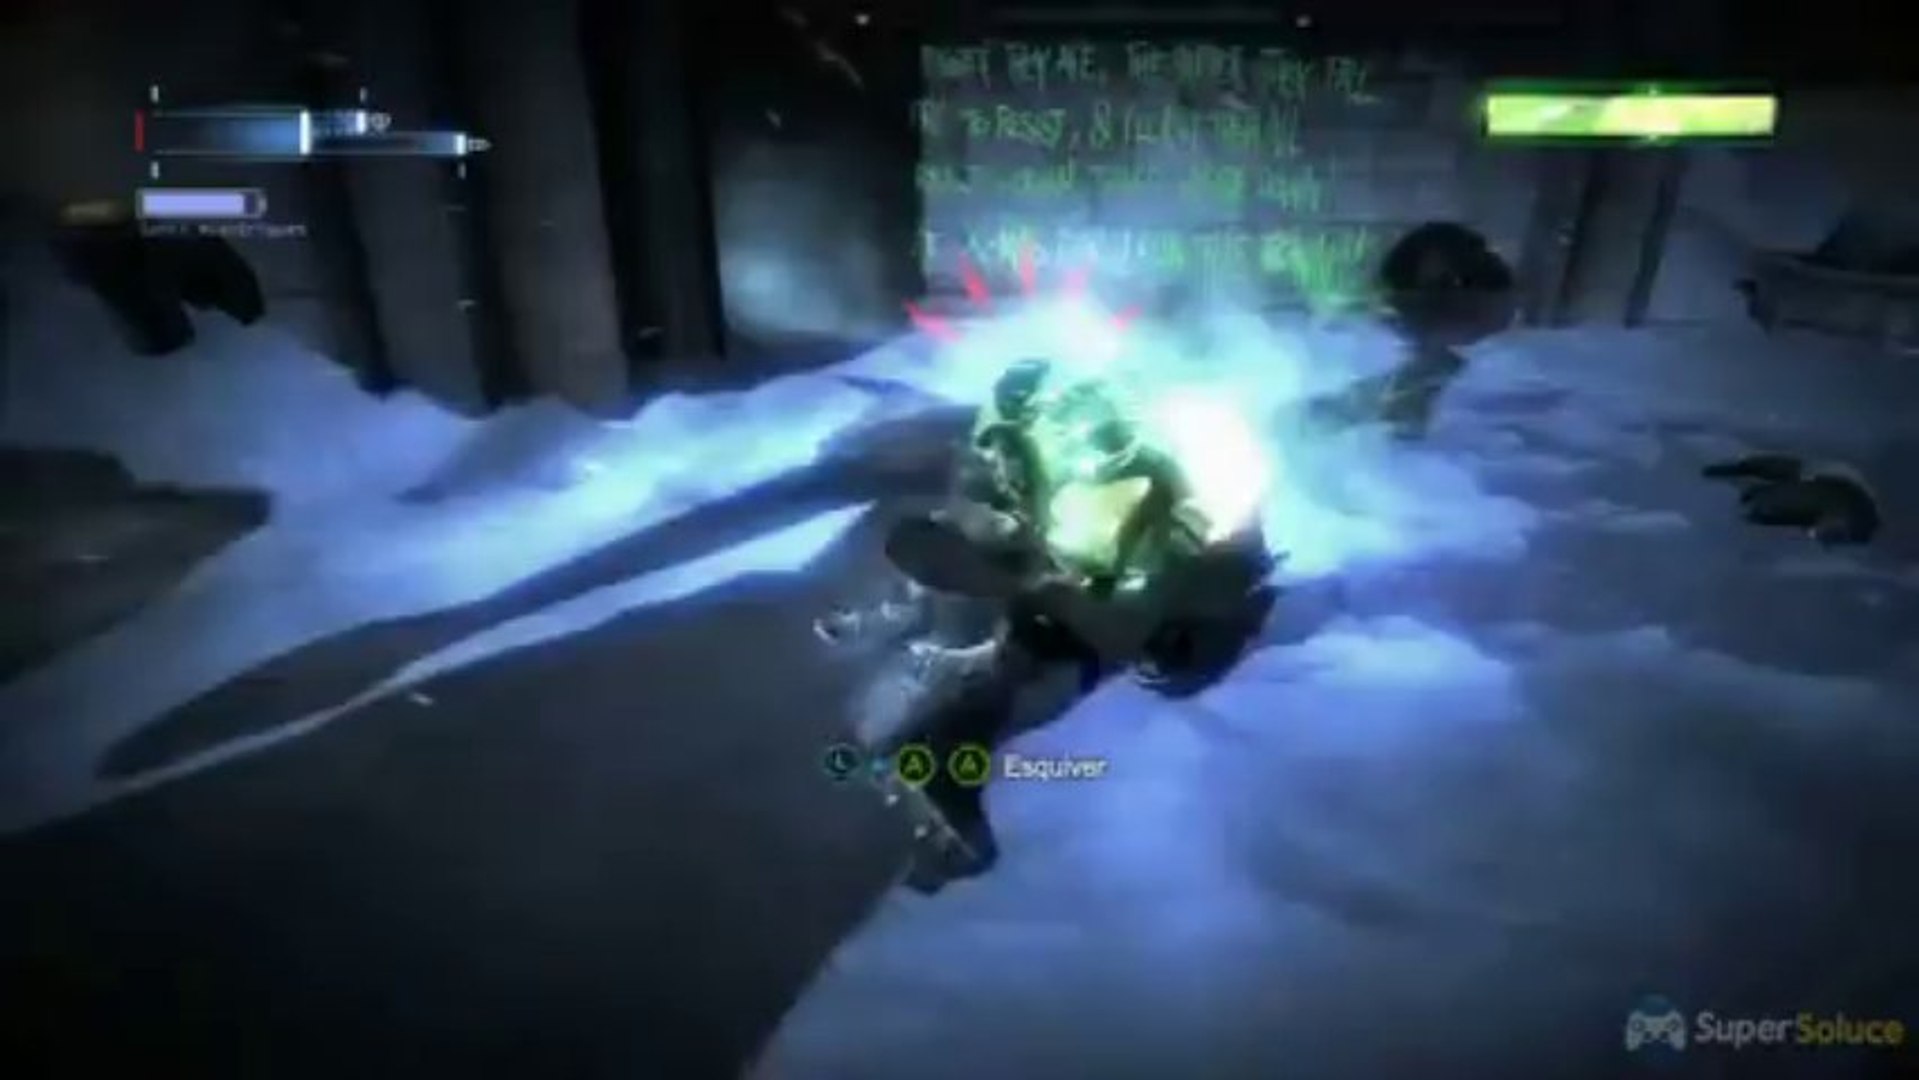 BATMAN PS5 BANE Boss Fight 4K ULTRA HD - Batman Arkham Origins - video  Dailymotion